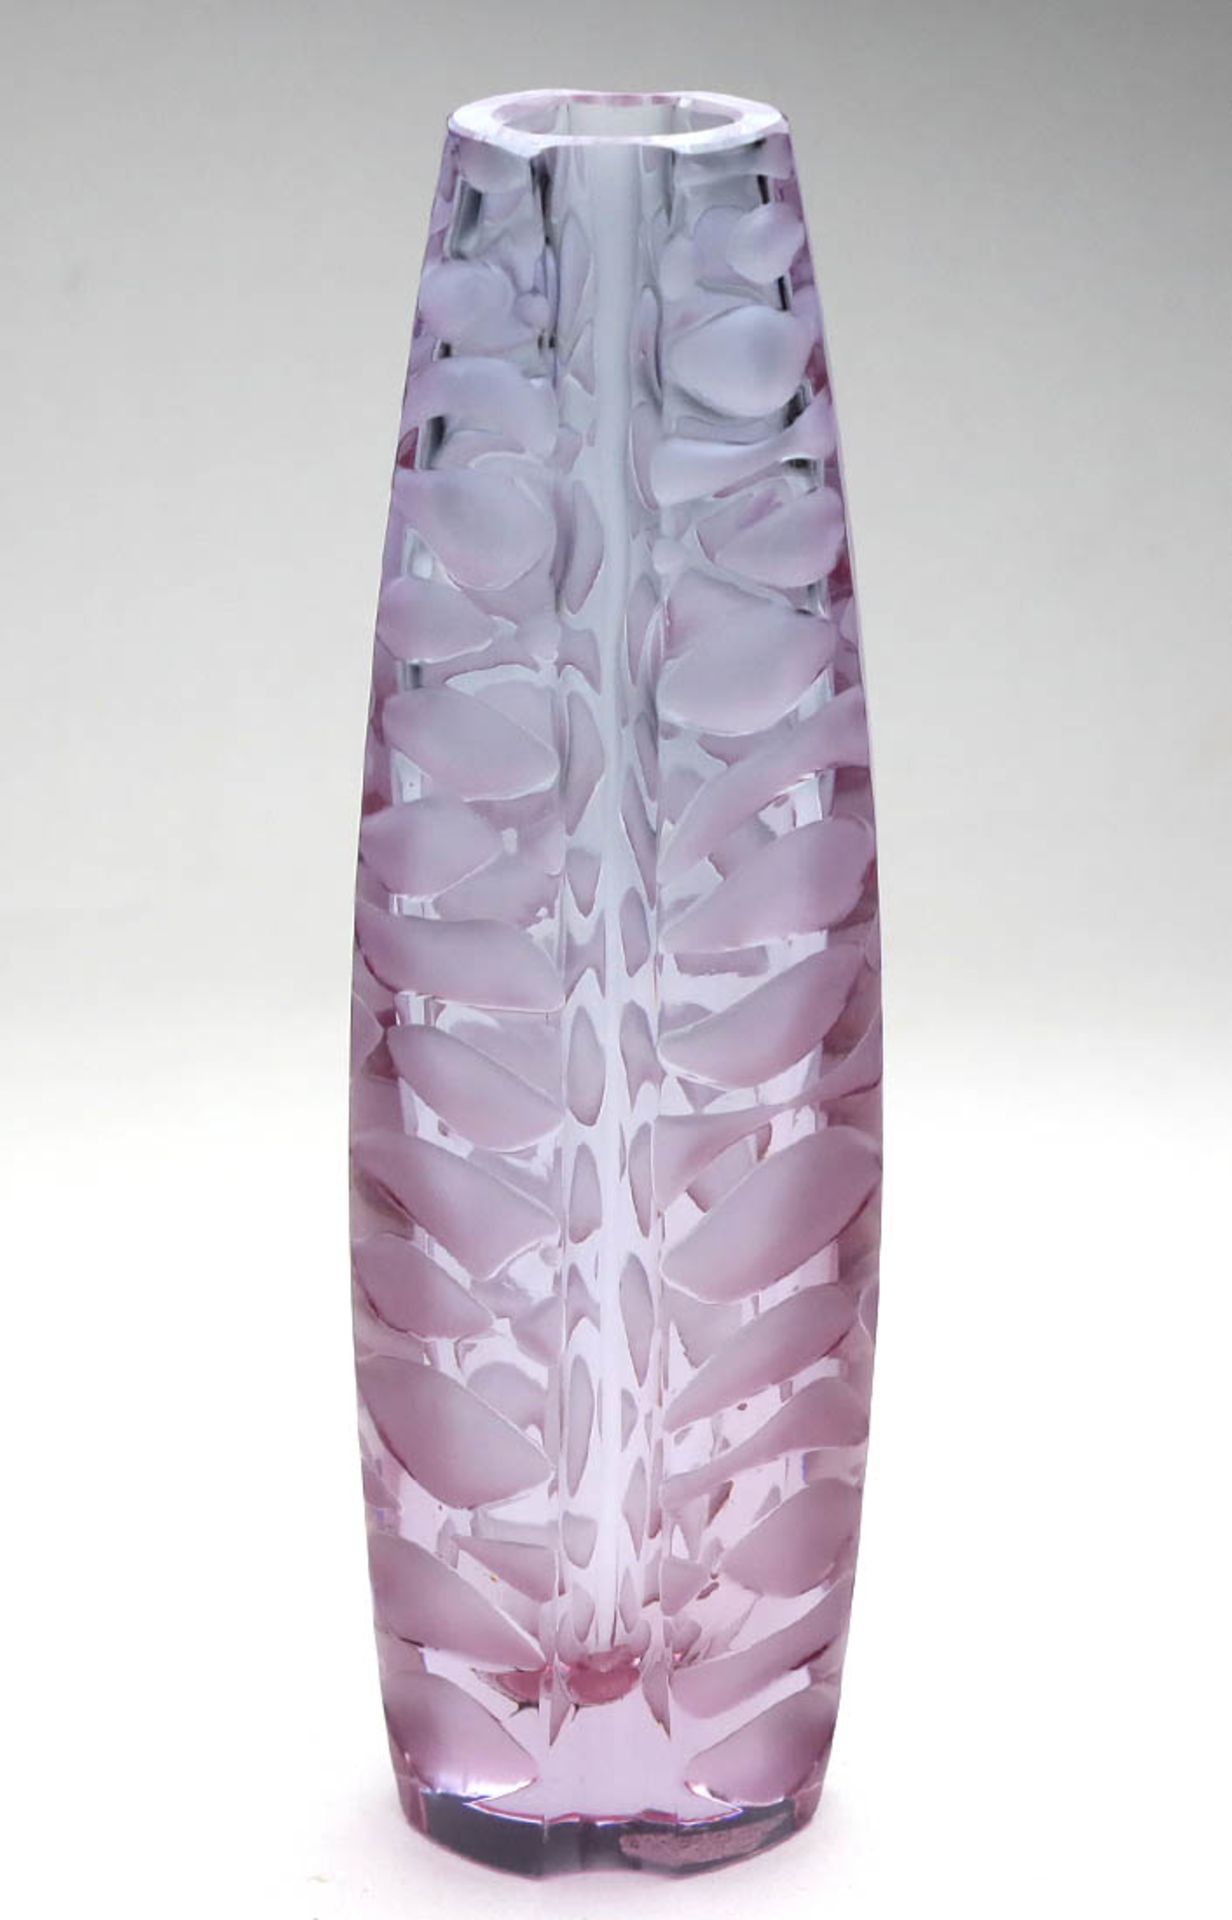 Alexandritglas Vasefliederfarbenes hellbau auslaufendes bzw. purpurfarbenes changierendes (